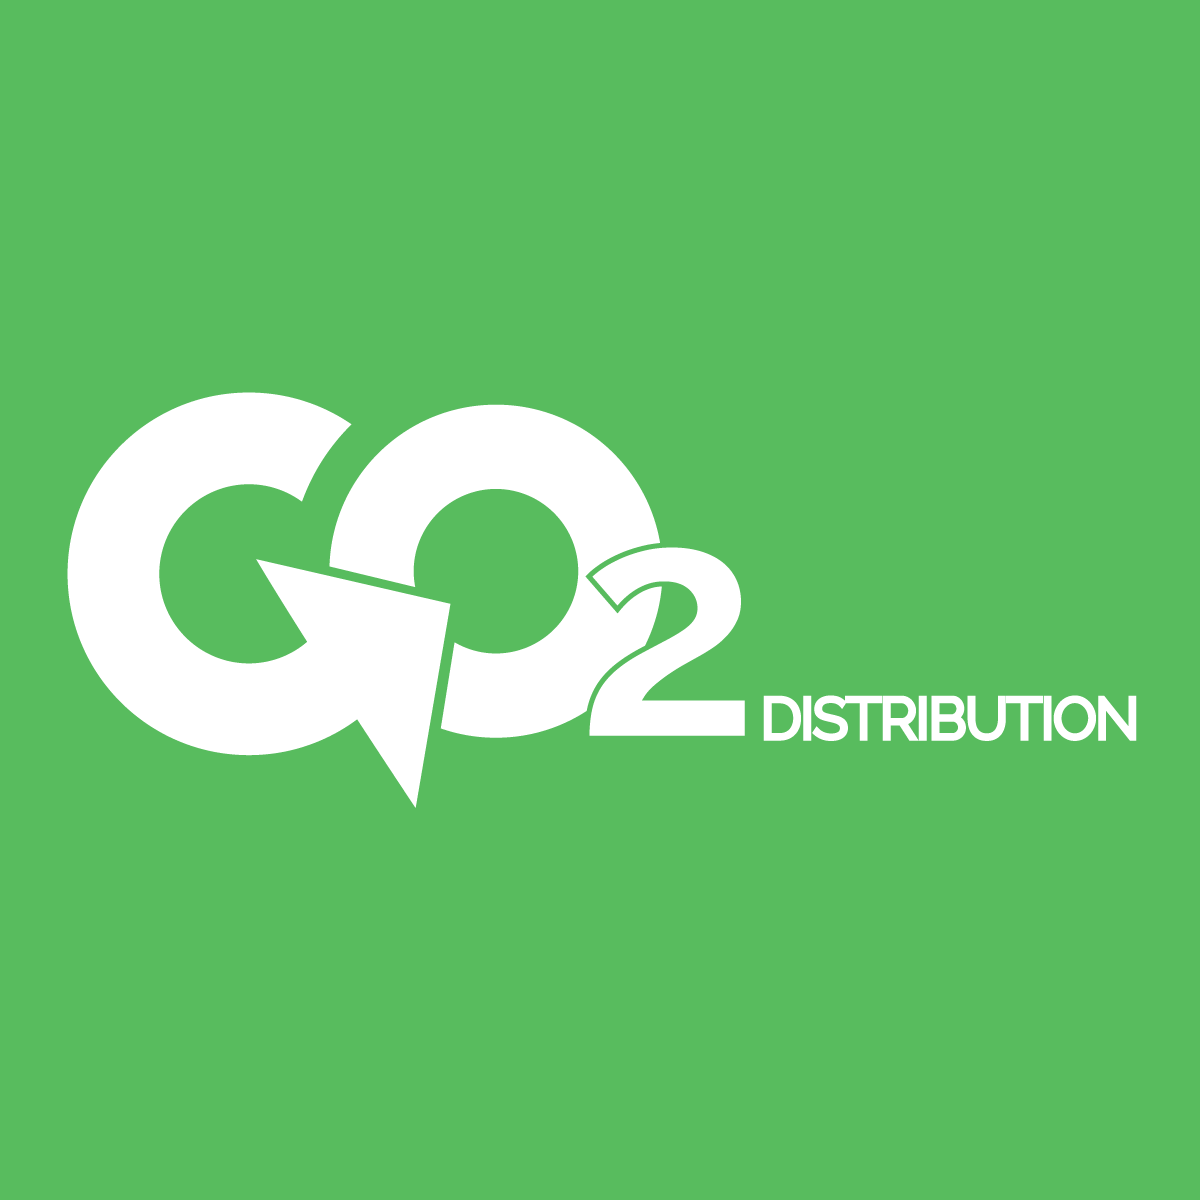 Go2 Distribution eCommerce Webstore